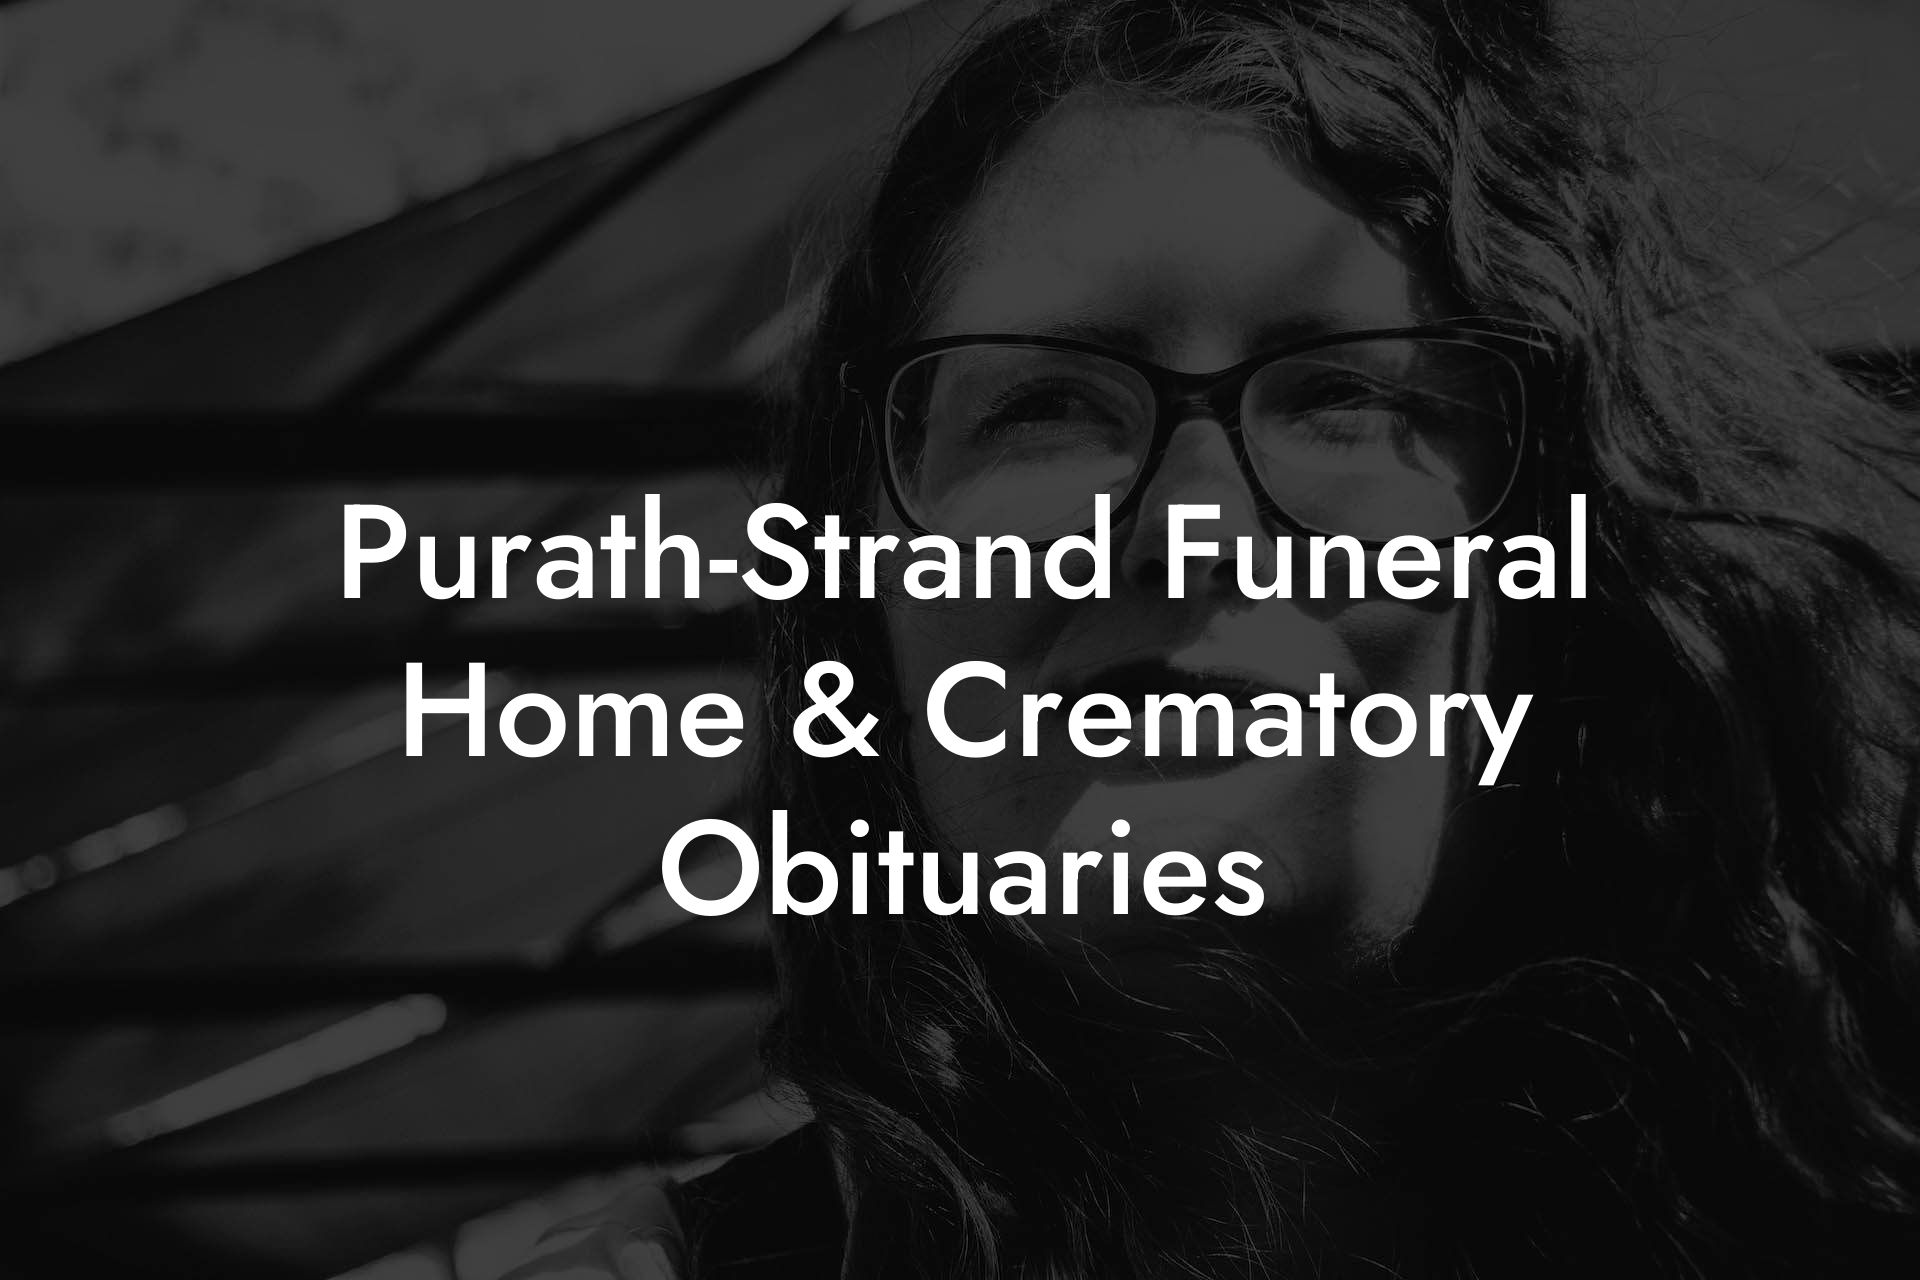 Purath-Strand Funeral Home & Crematory Obituaries